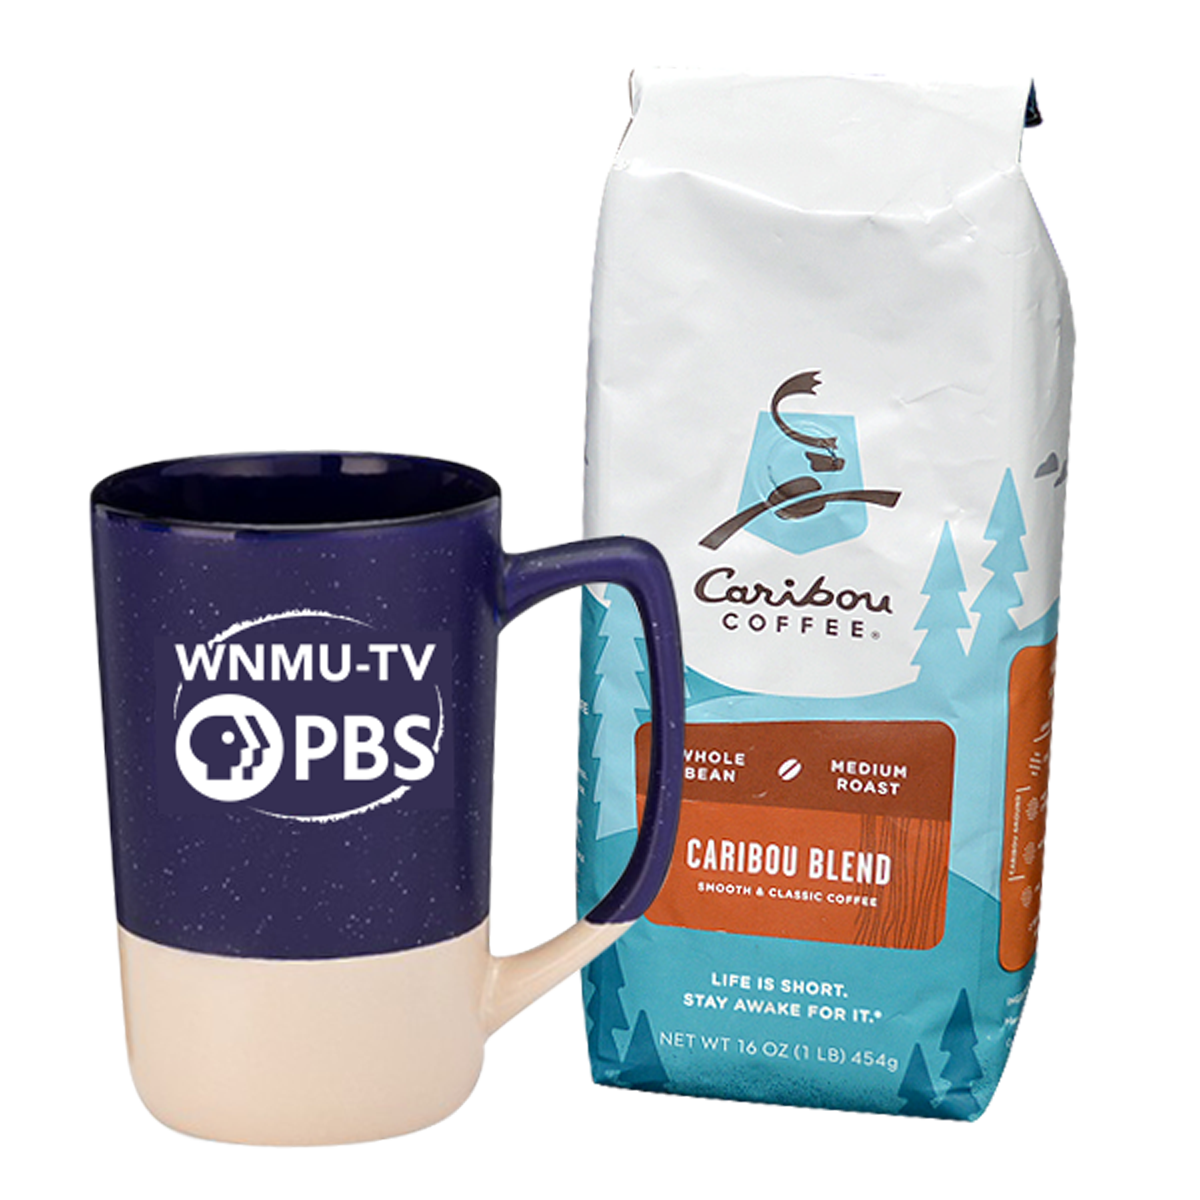 WNMU-TV Mug and Caribou Coffee